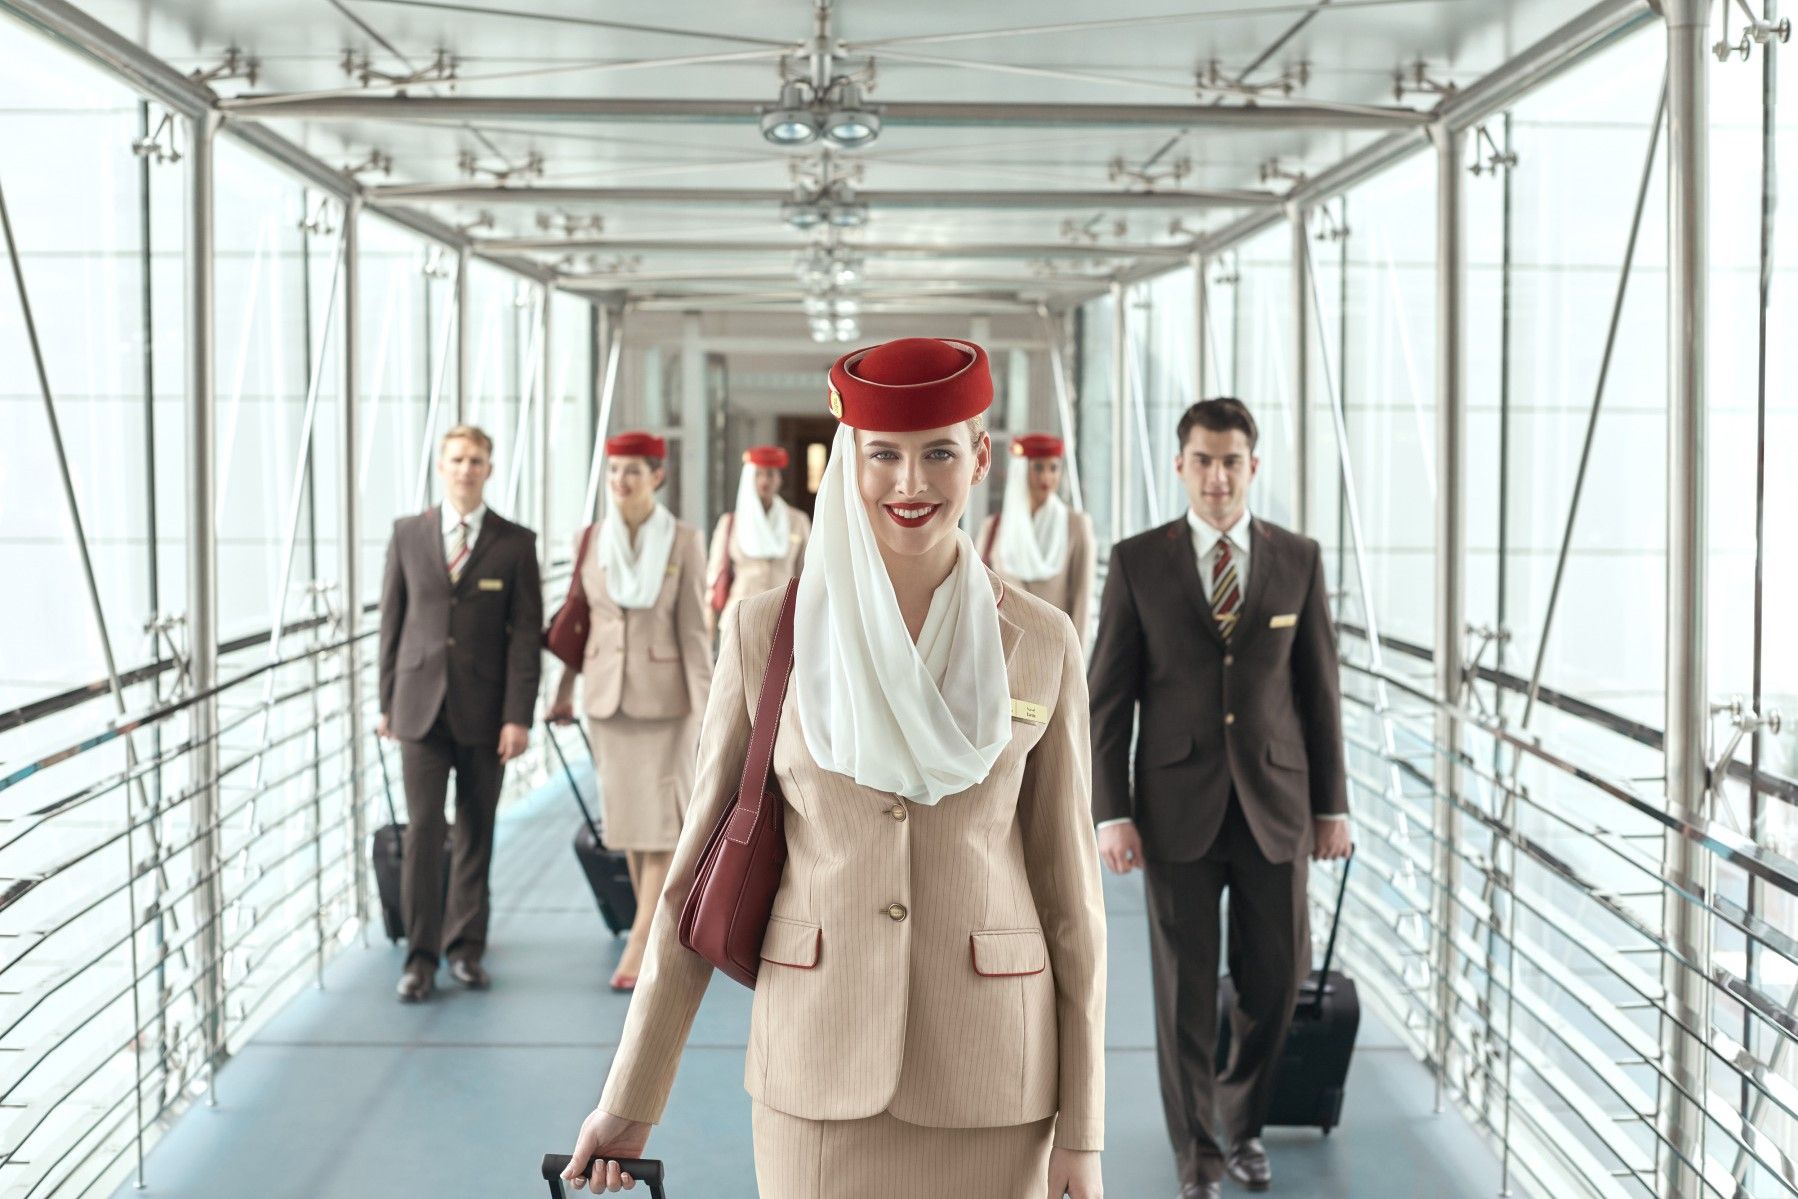 Several Emirates crew members walking on a jet bridge.